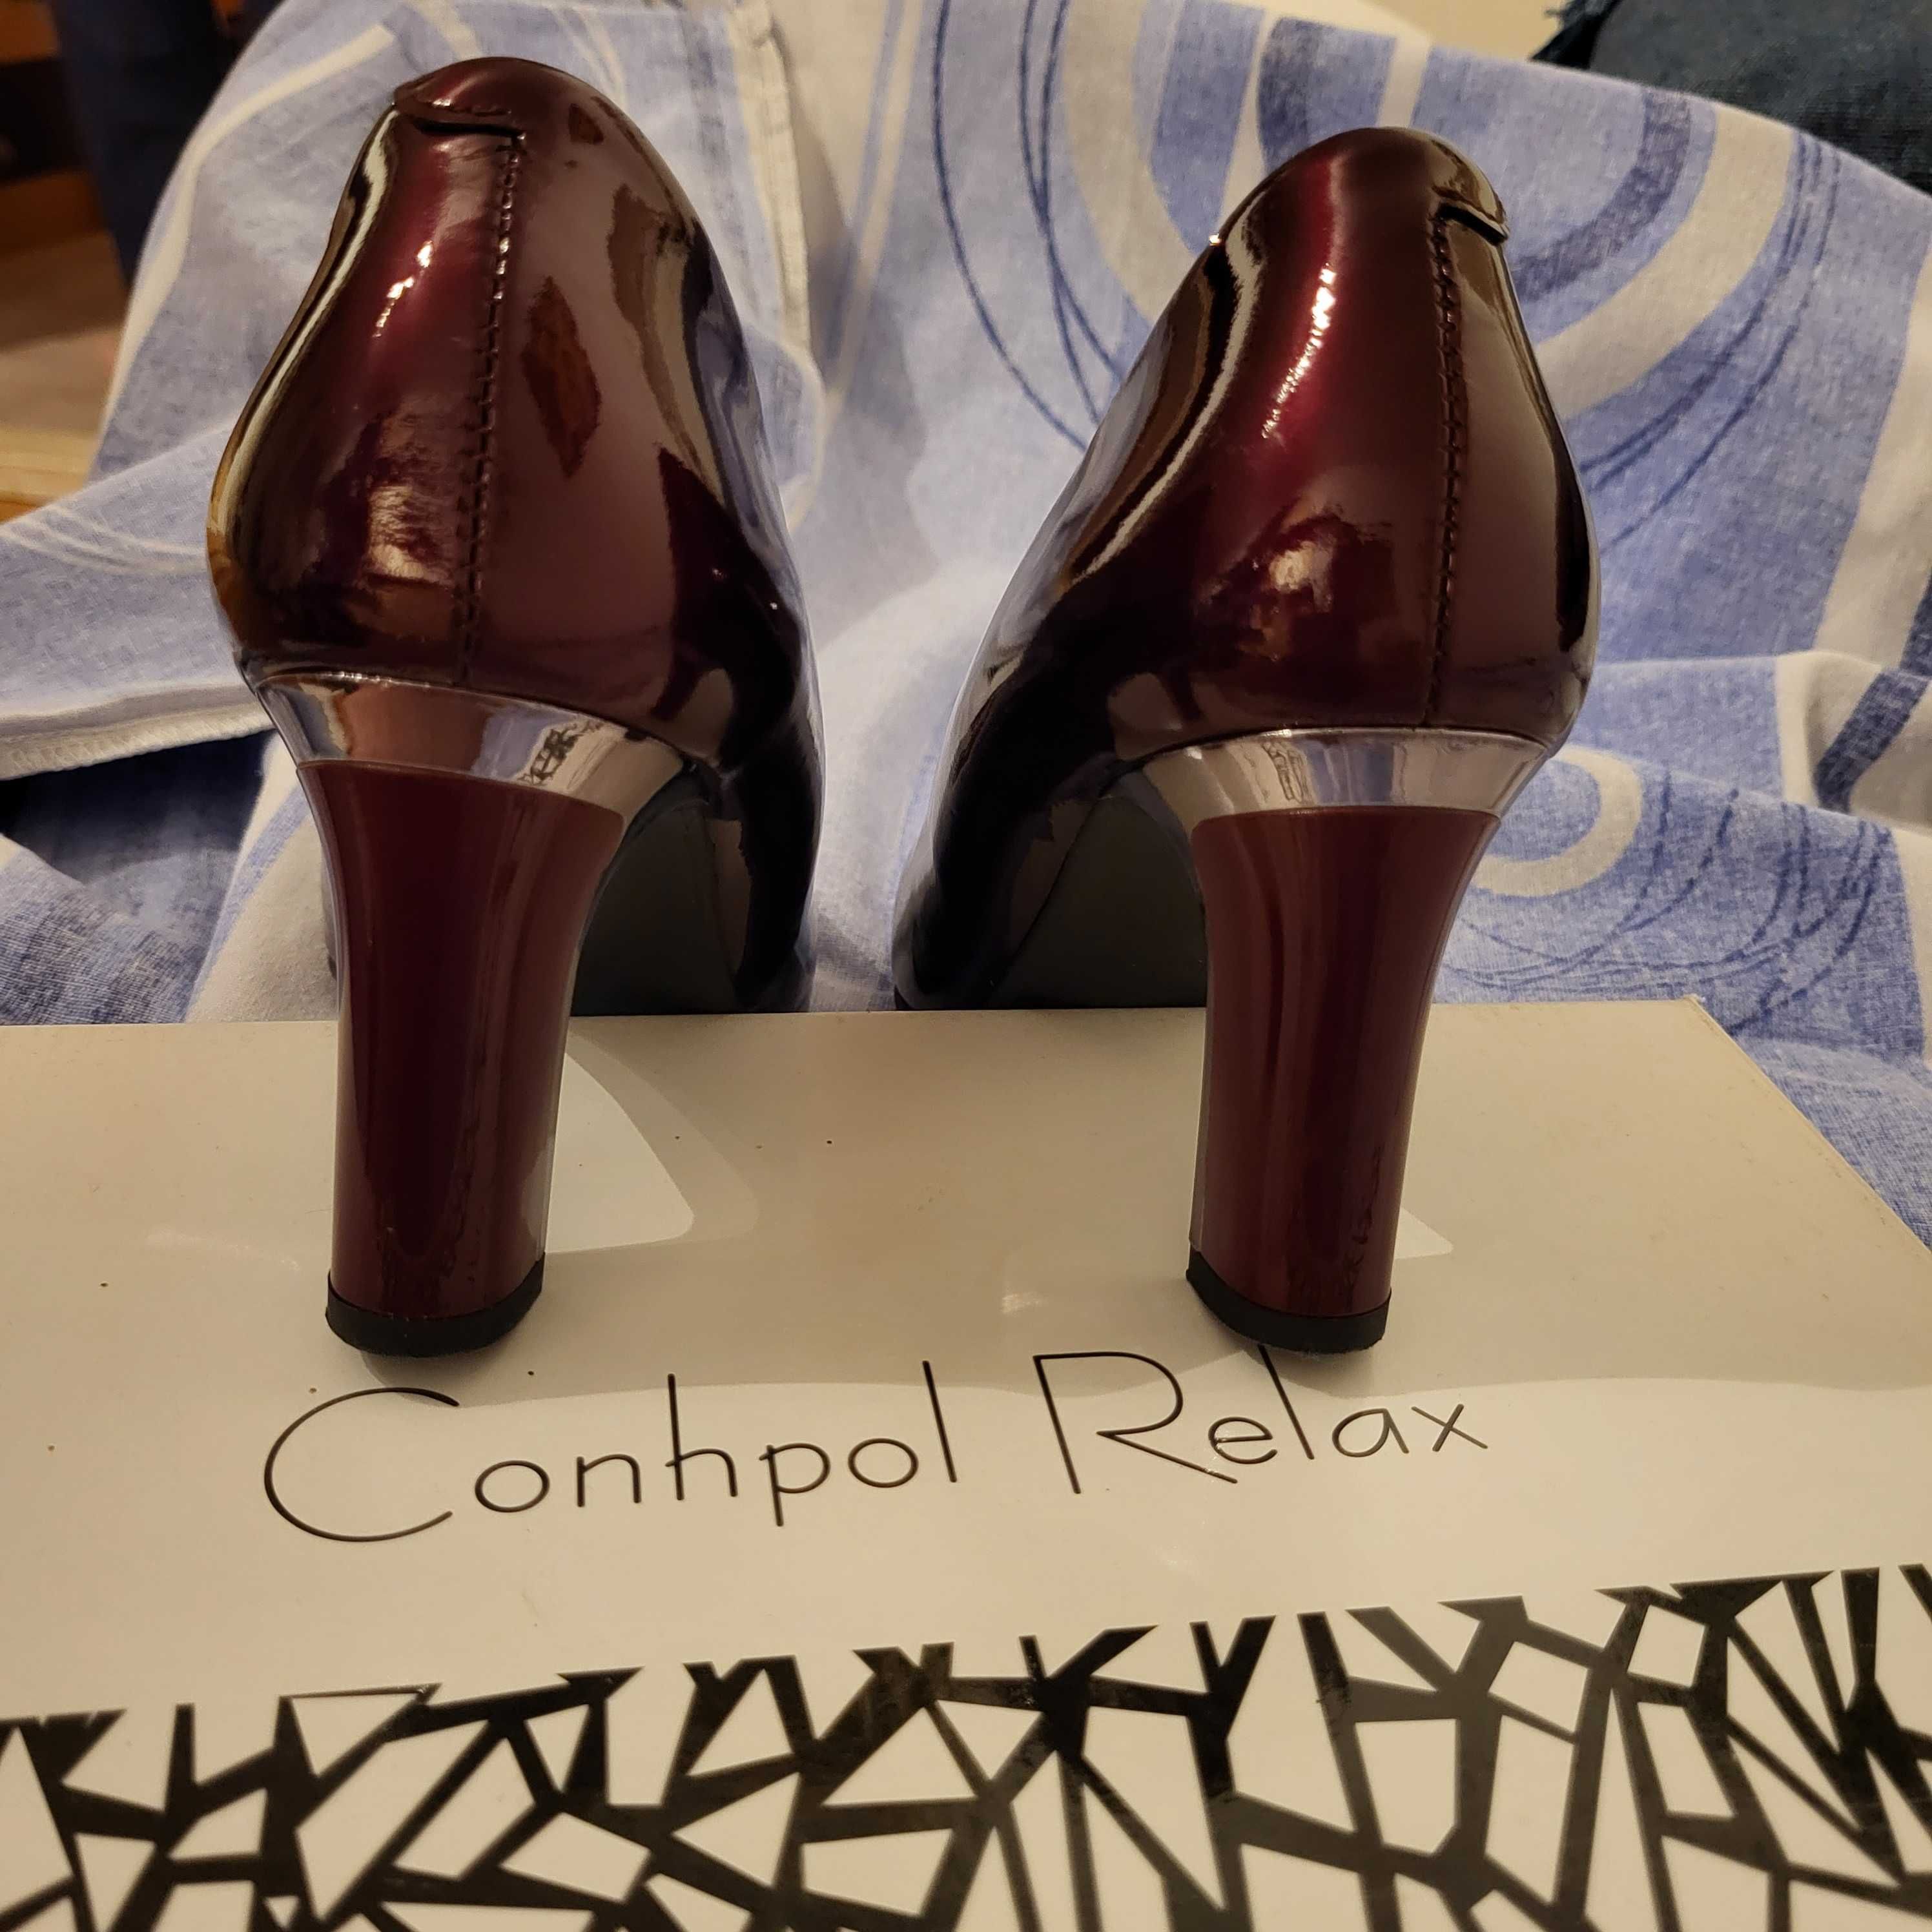 Pantofii Conhpol Elite Relax  piele 100% superbi! Foarte comozi!